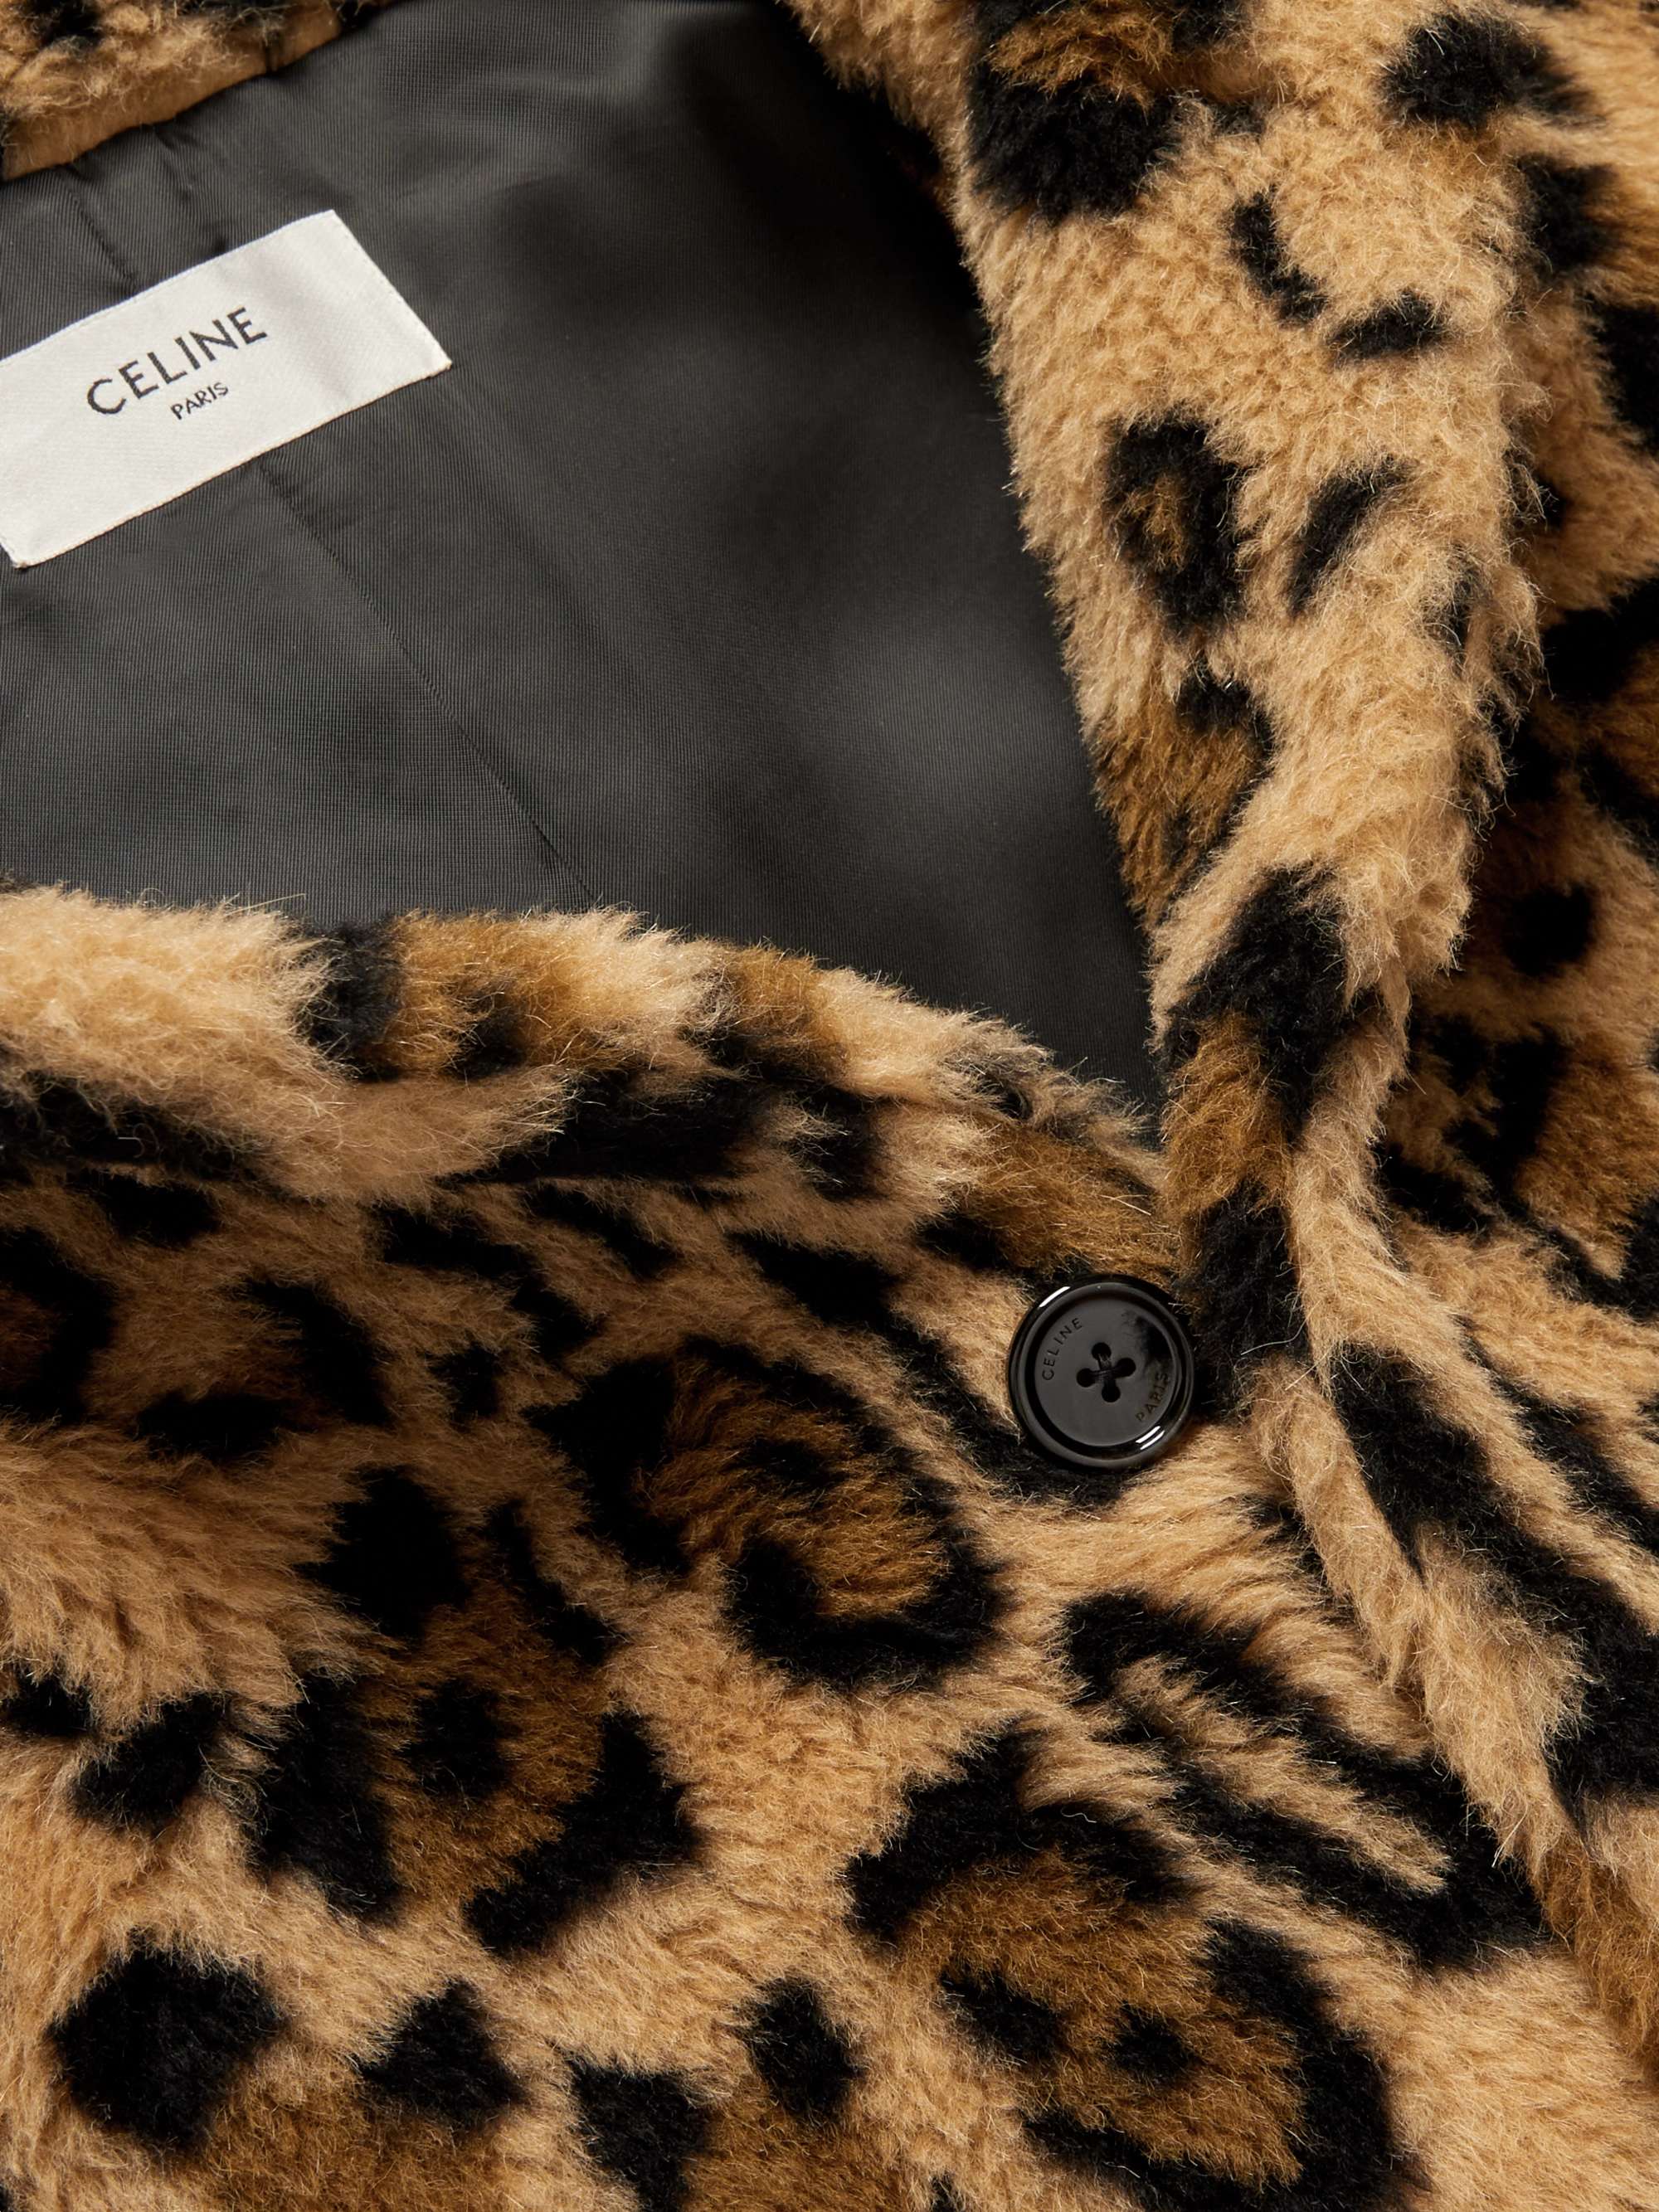 CELINE HOMME Oversized Leopard-Print Alpaca, Wool and Silk-Blend Faux Fur Coat